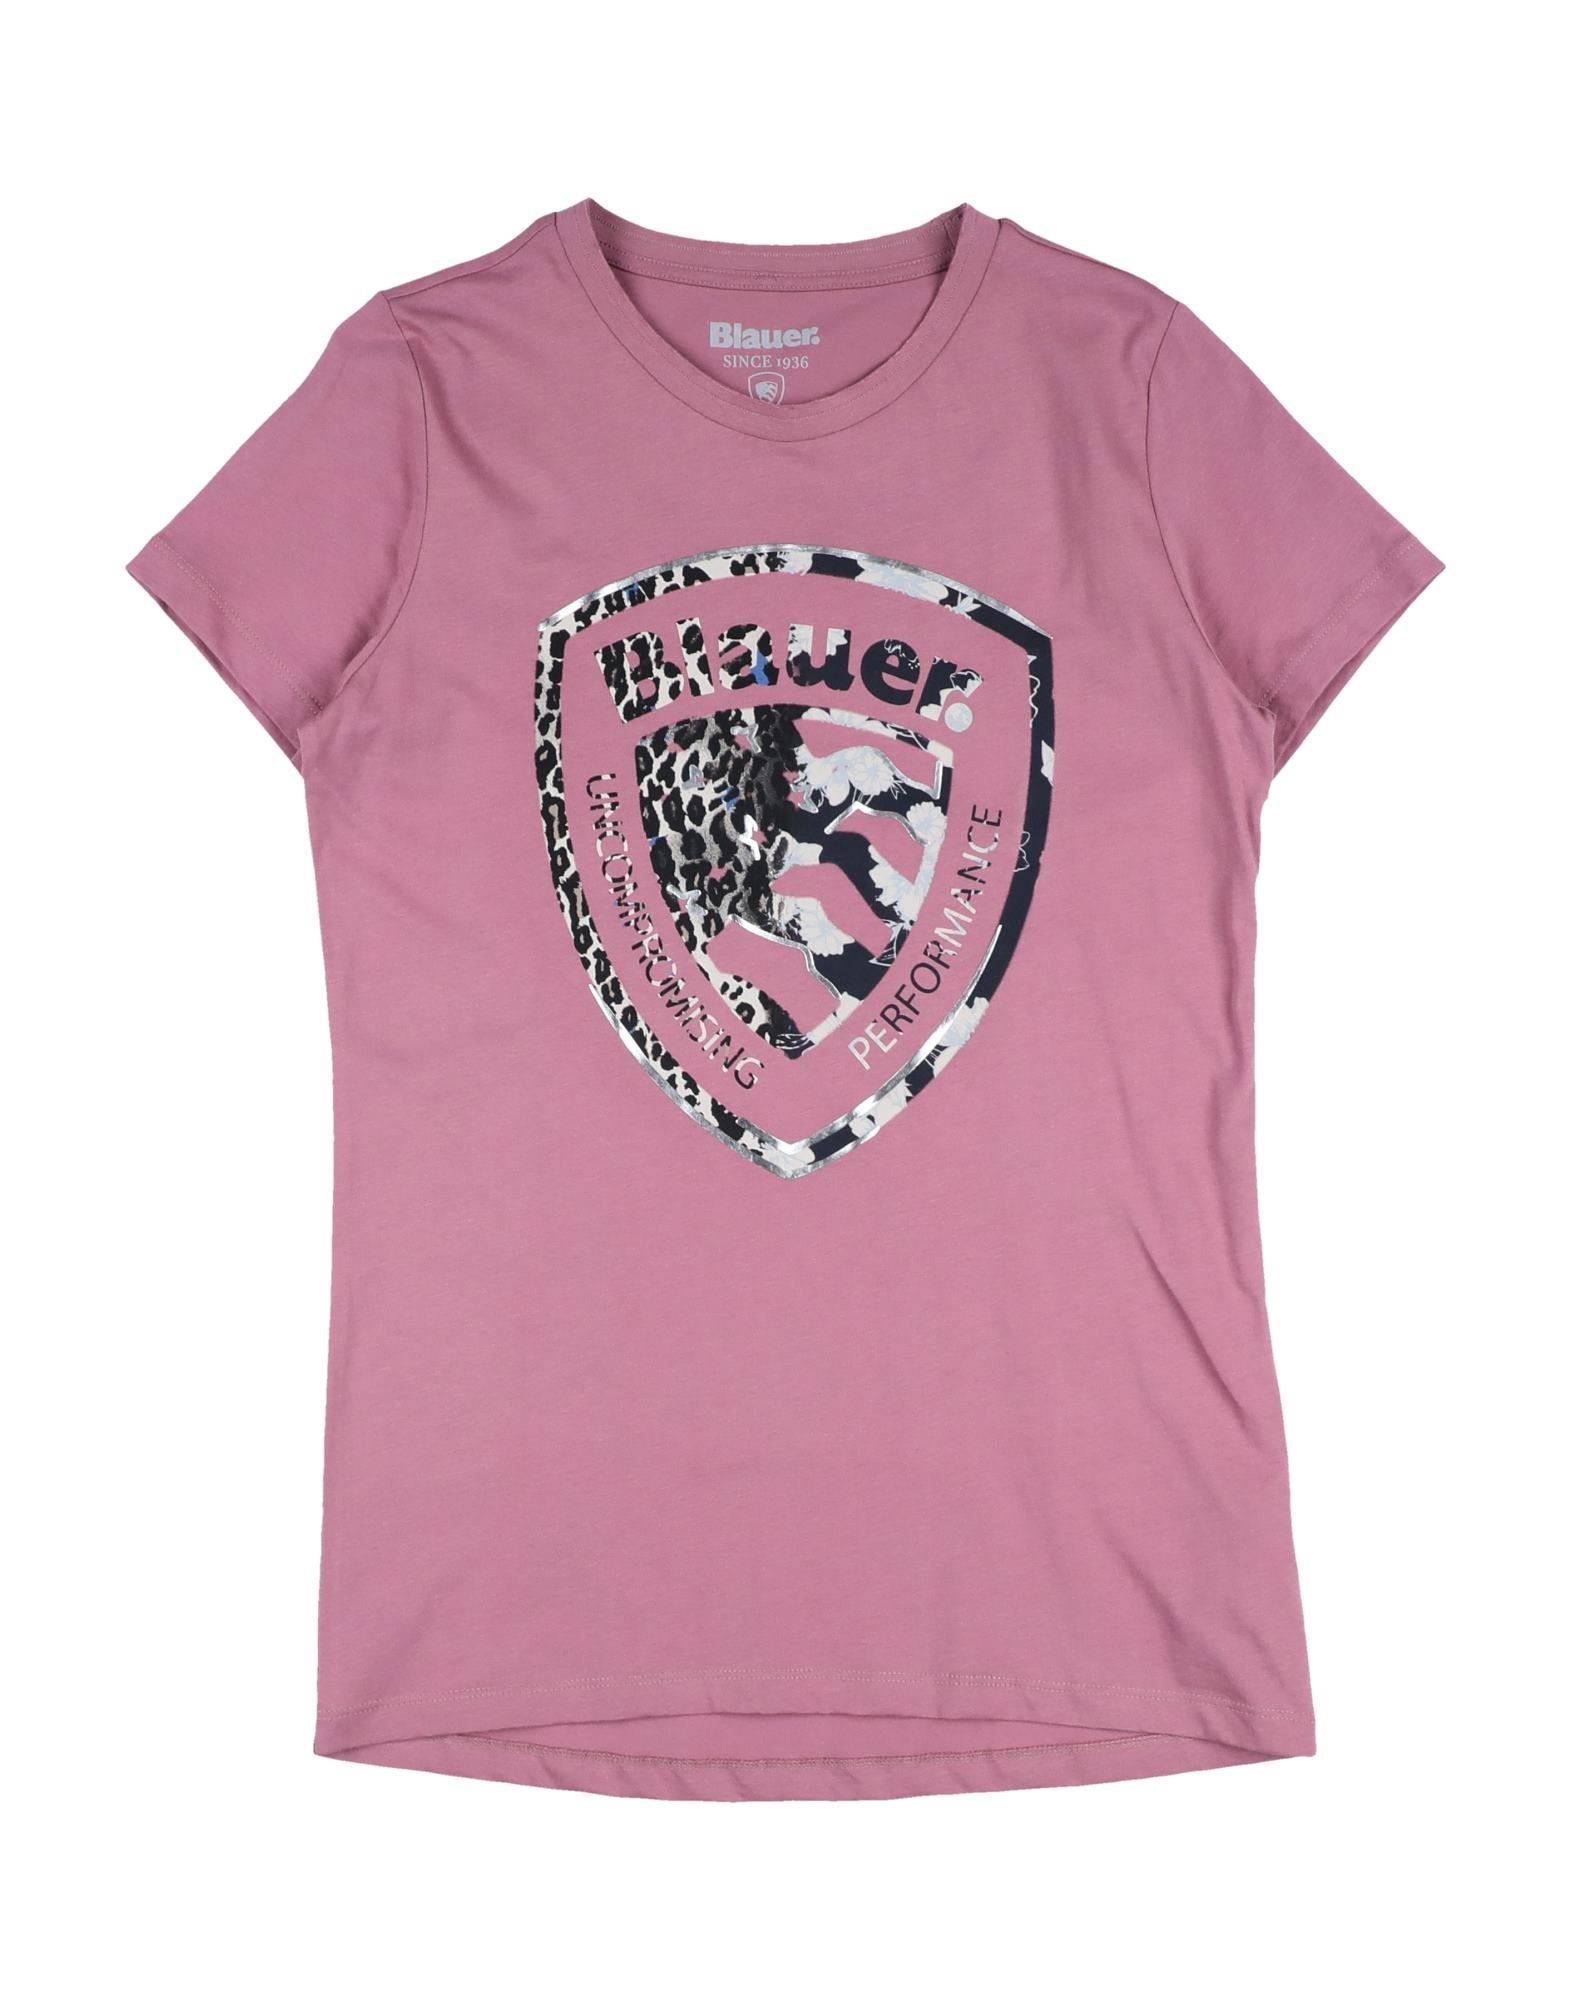 Blauer Kids' T-shirts In Pastel Pink